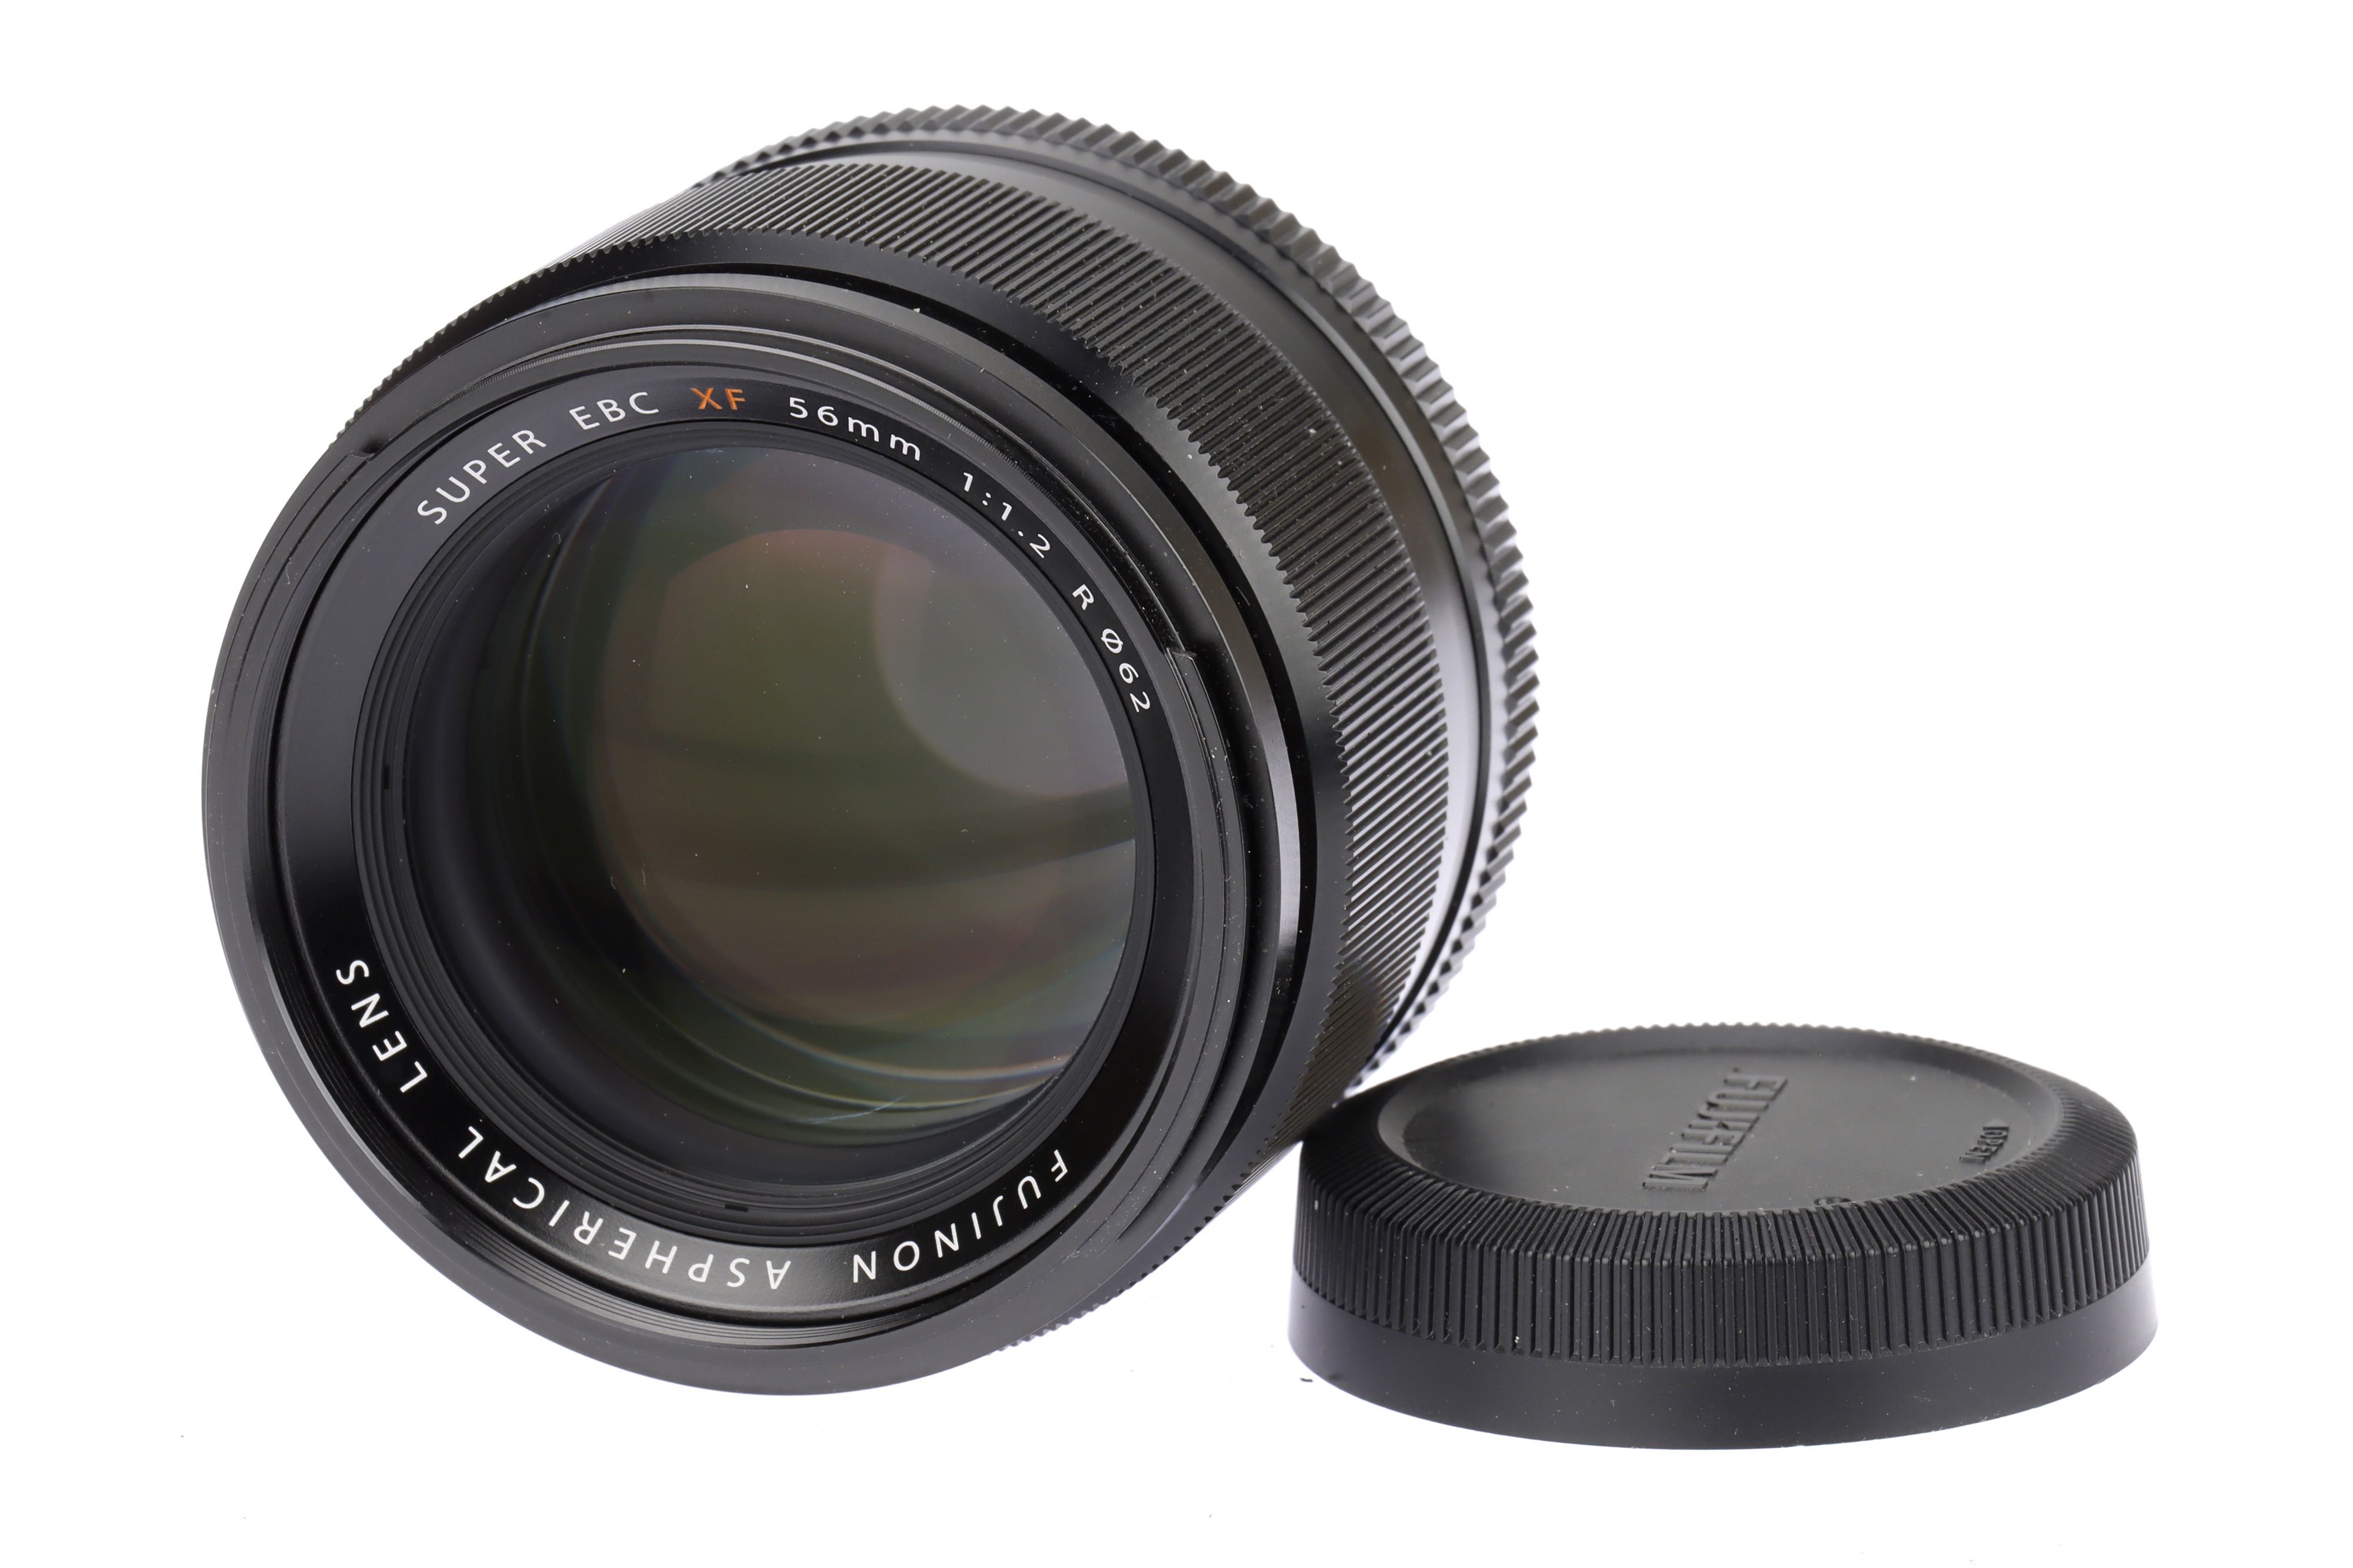 A Fujifilm Fujinon Super EBC XF f/1.2R 56mm Aspherical Lens - Image 2 of 3